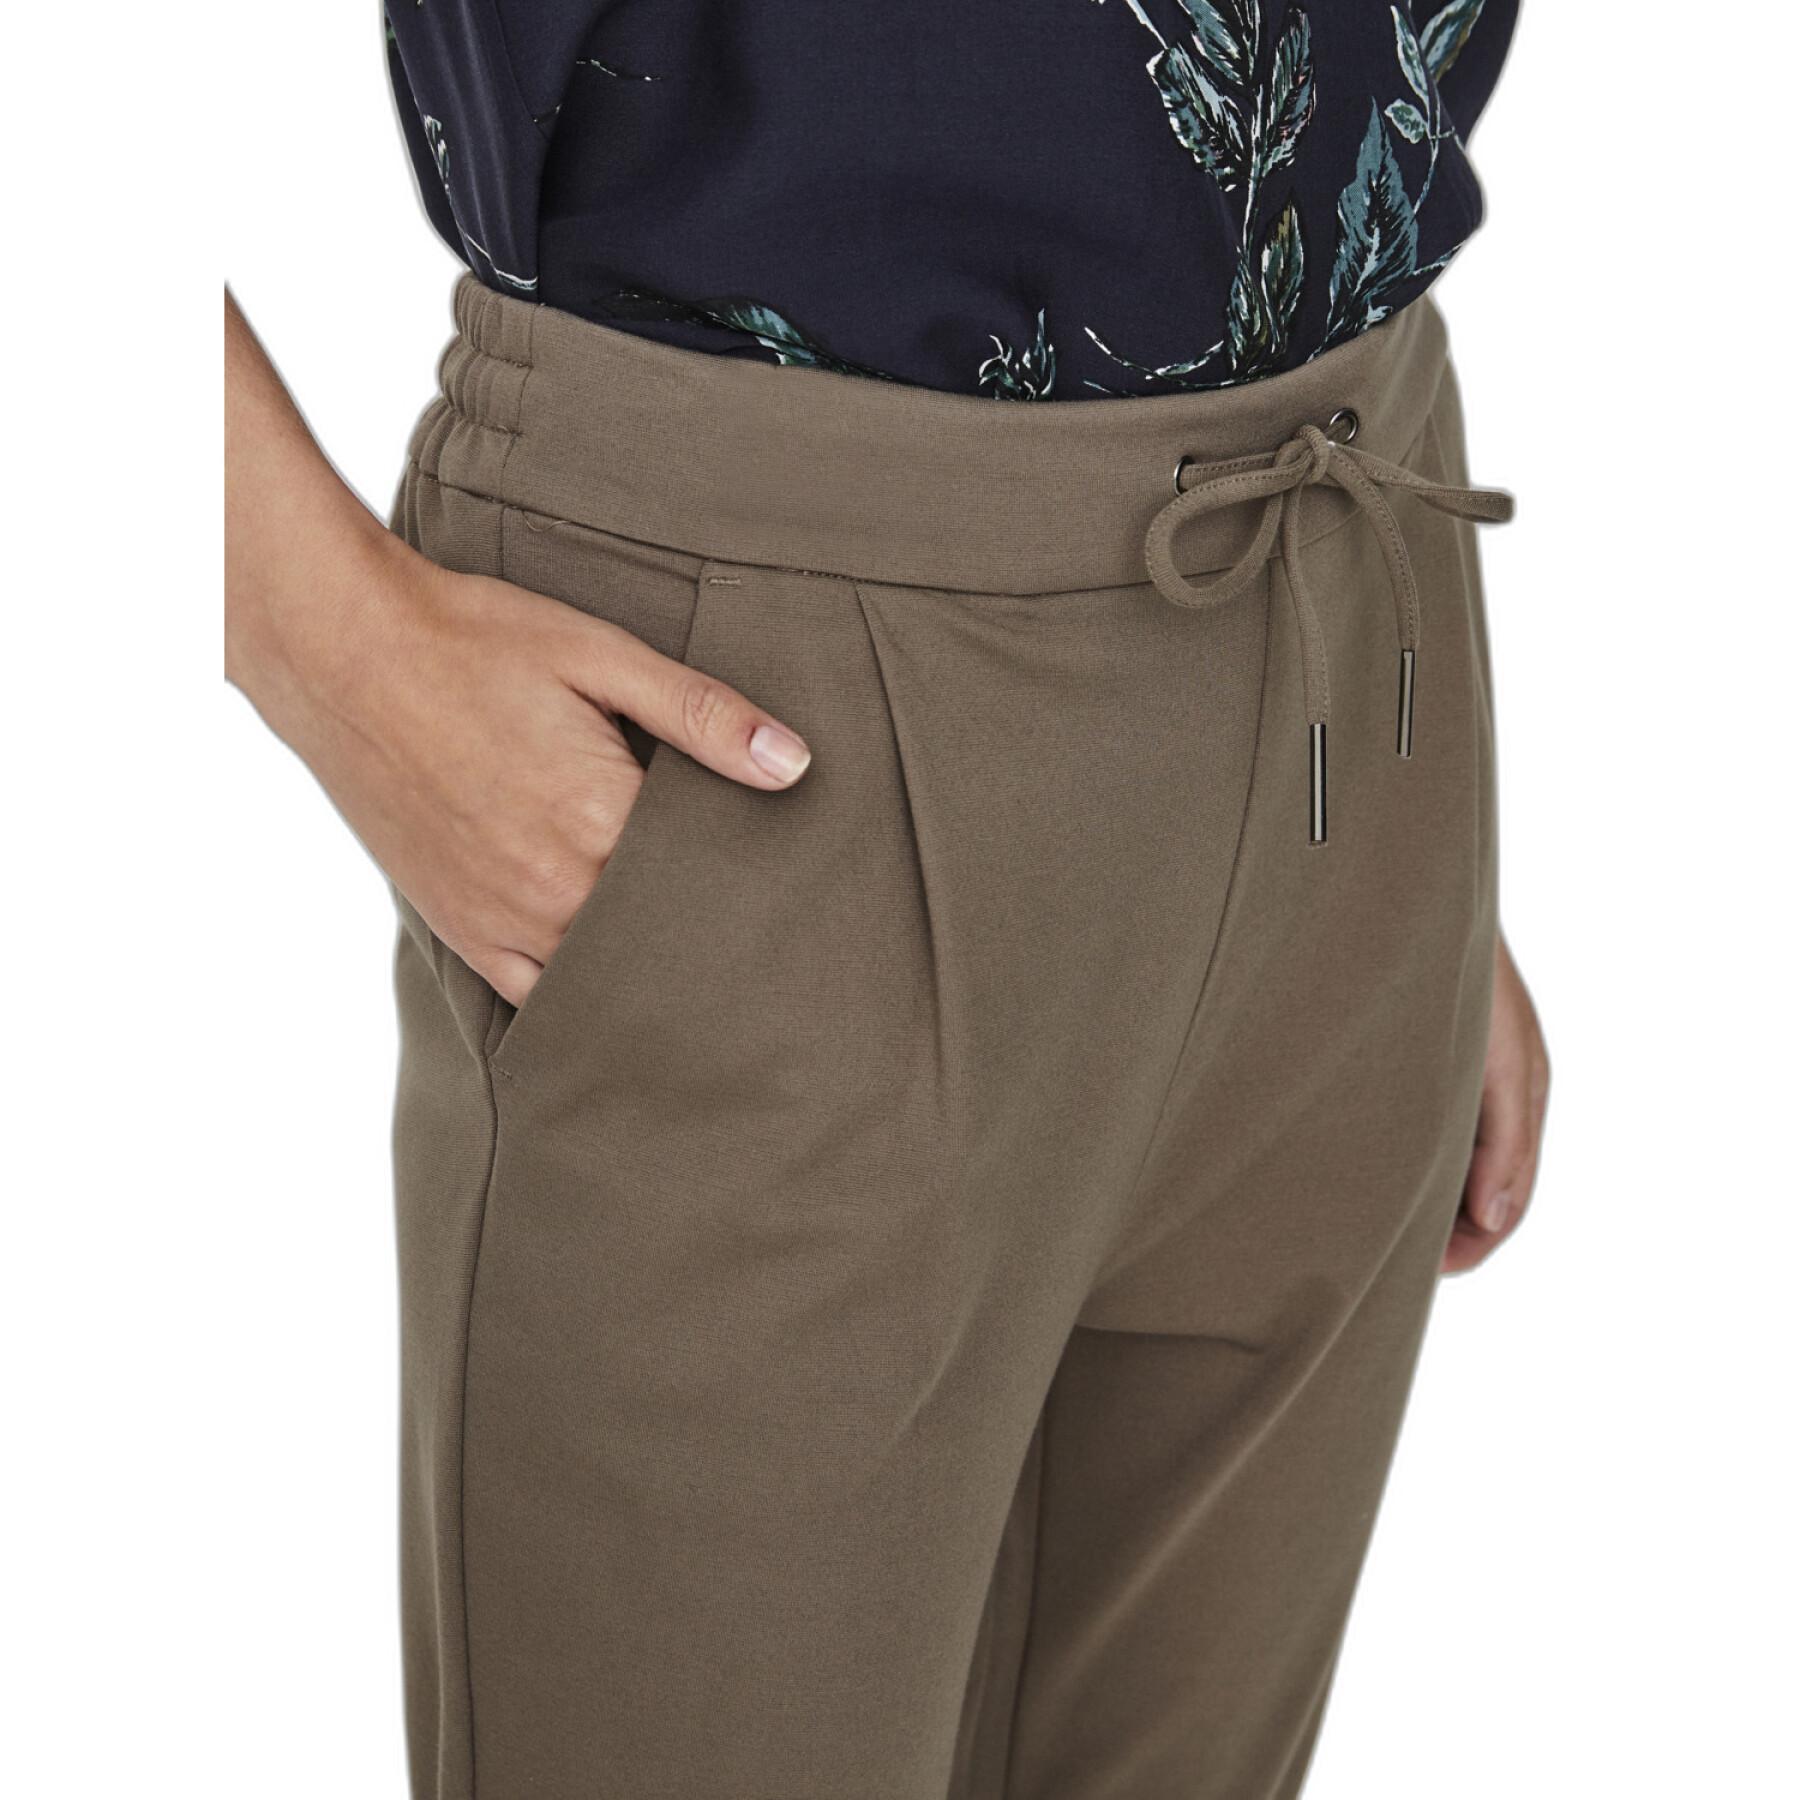 Loose-fitting corded pants for women Vero Moda Eva Mr